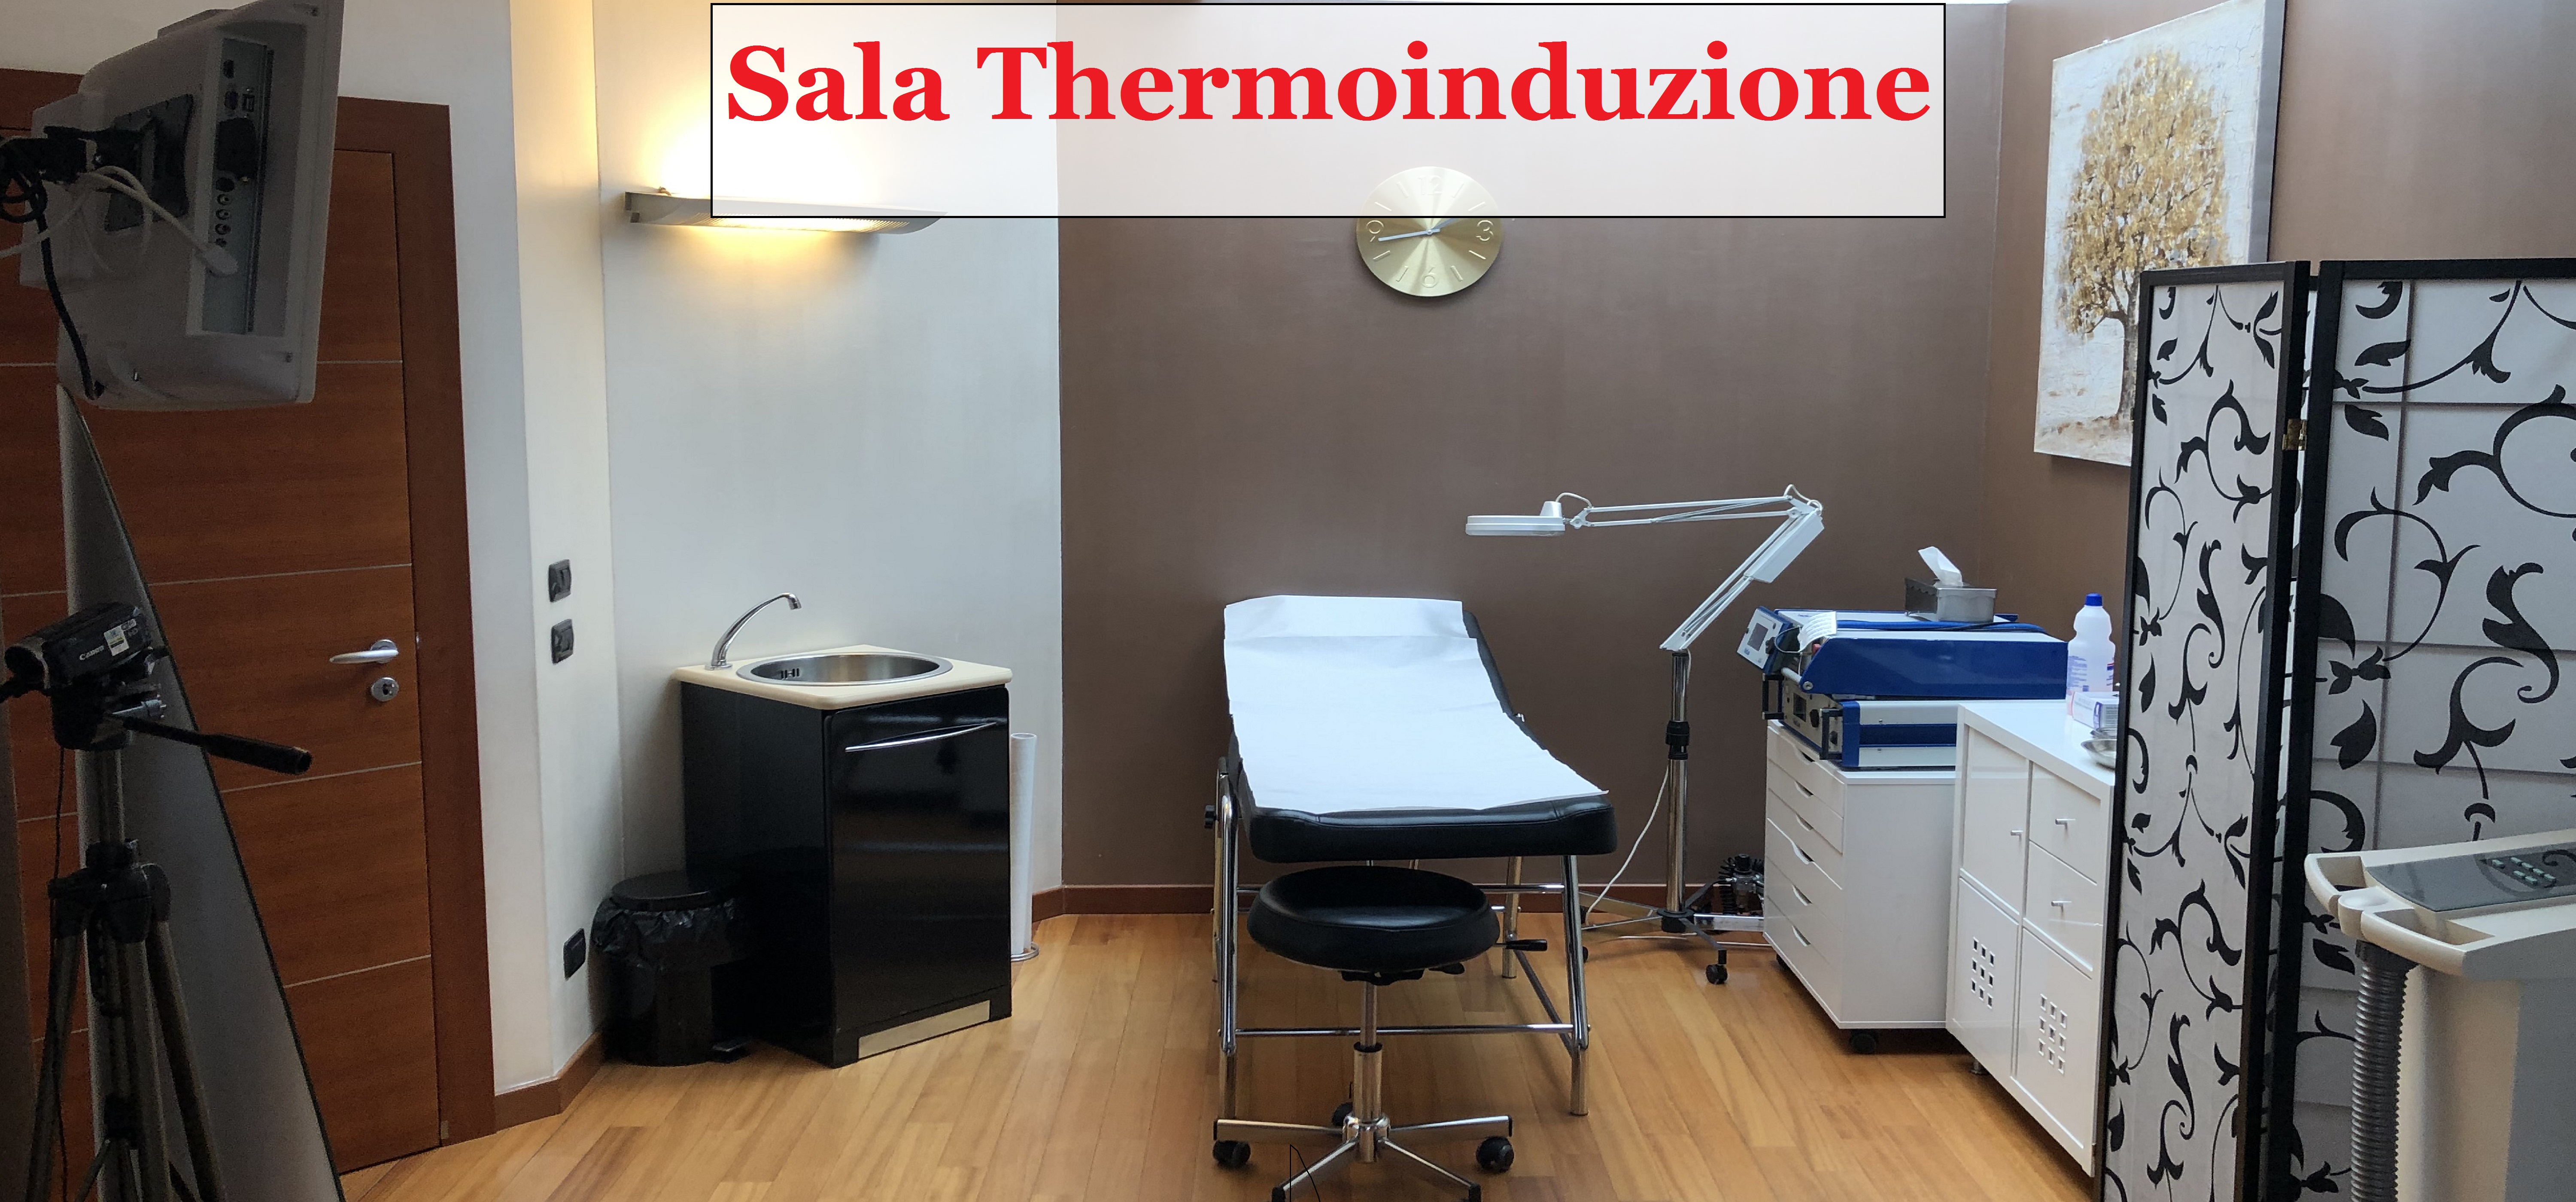 Medi Jeunesse SA - Sala Thermoinduzione - Lugano